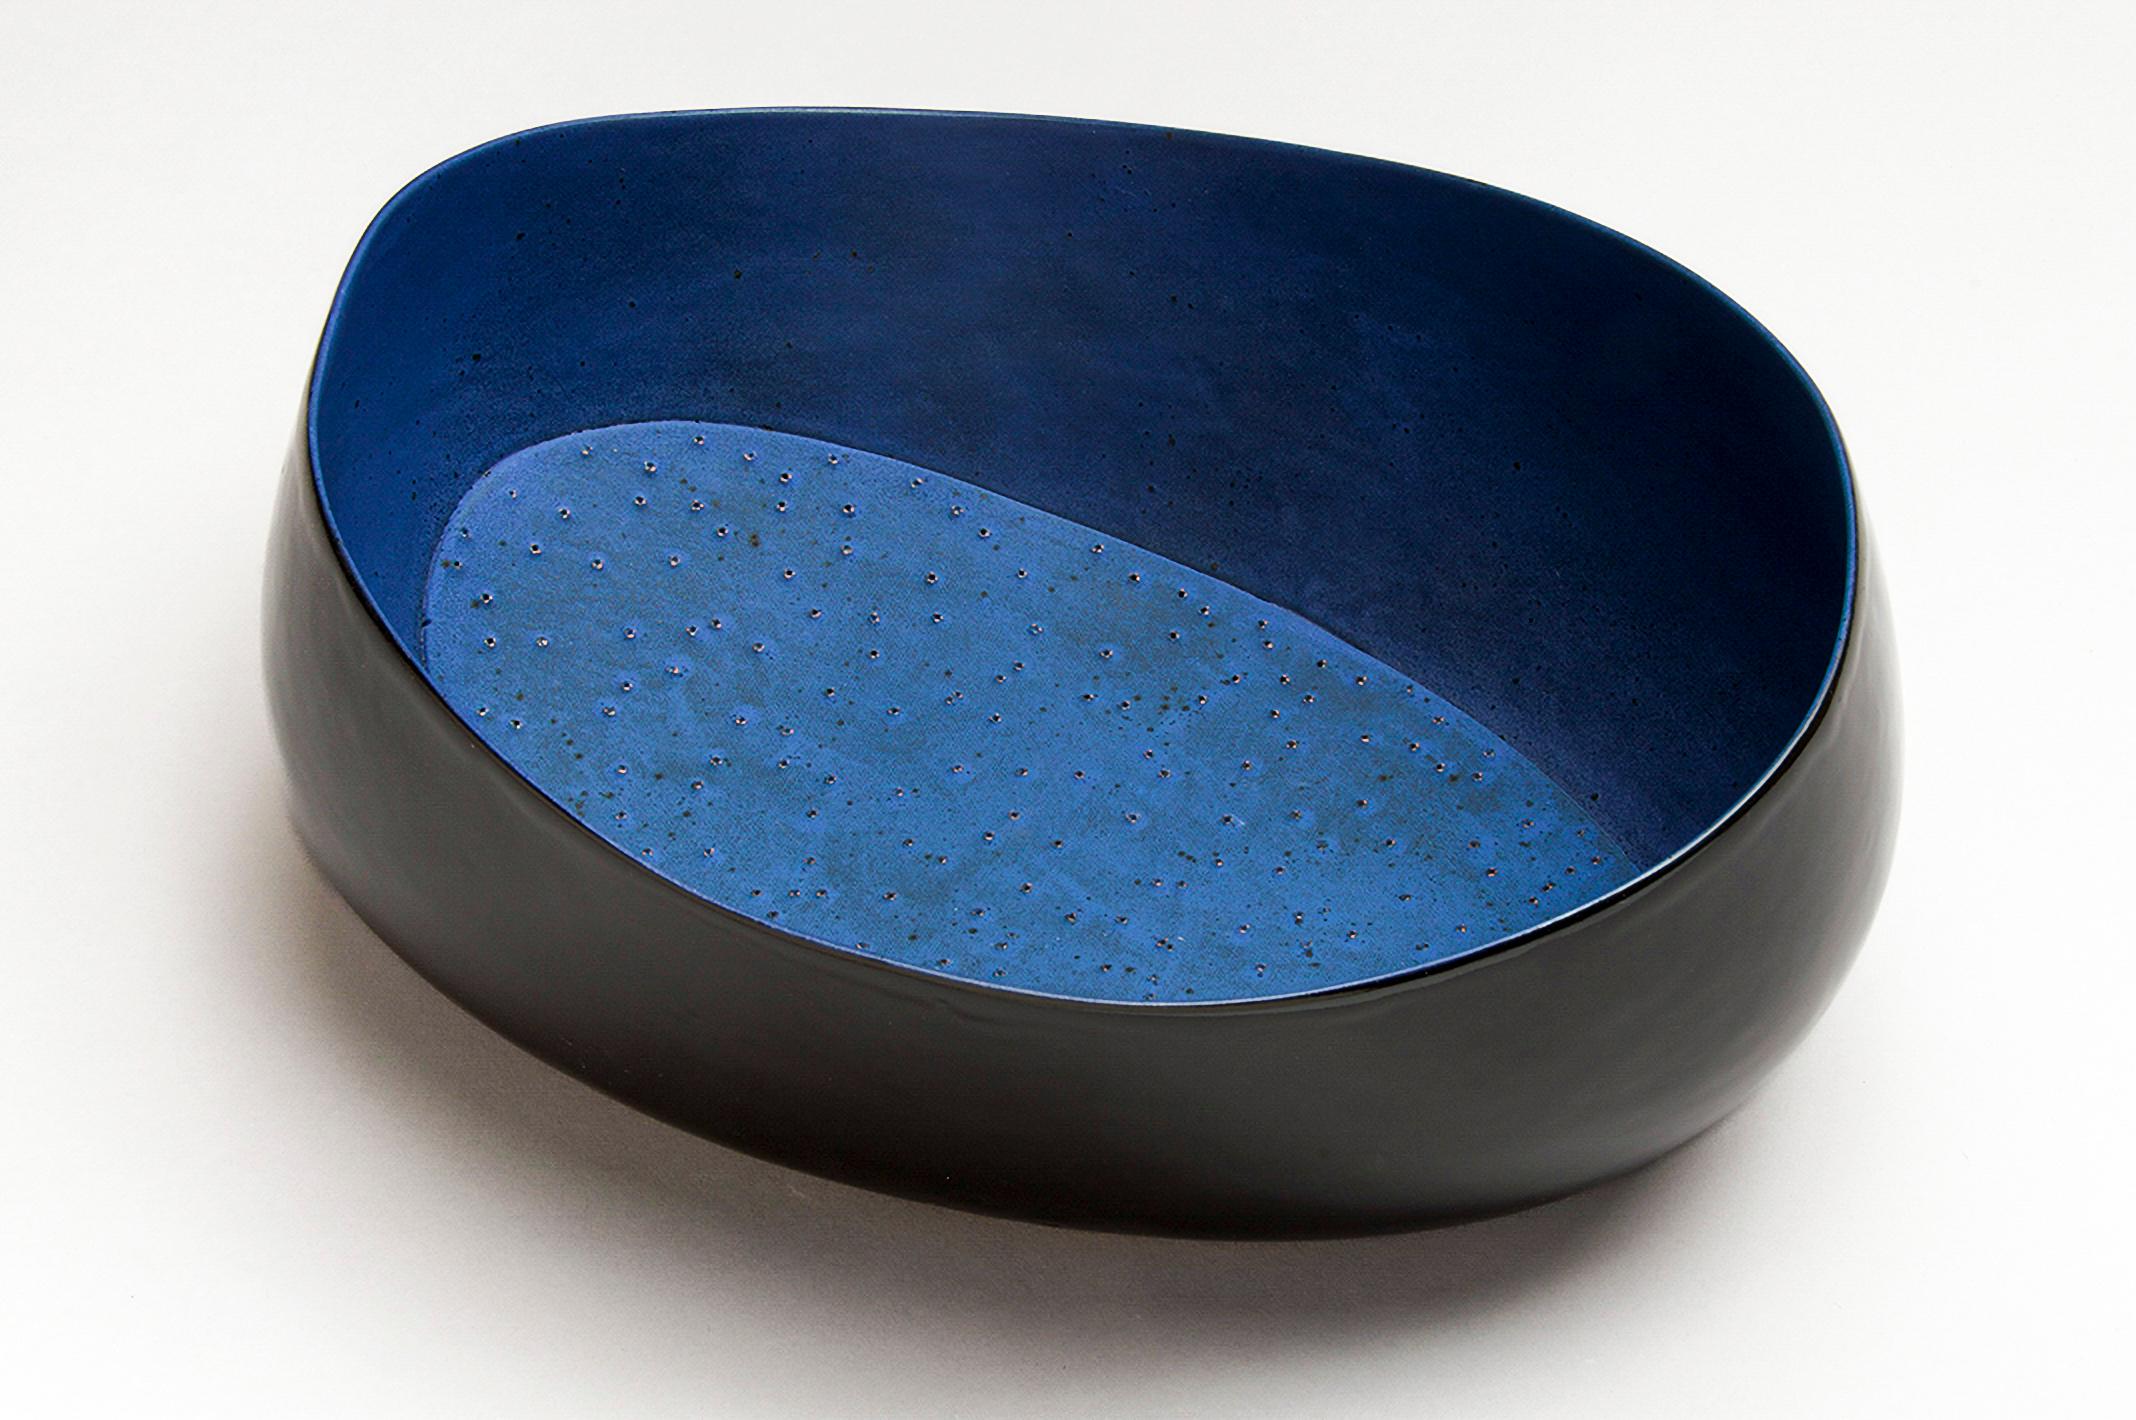 Steven Heinemann Abstract Sculpture - Afterlife No 3  - blue, black, nature inspired, elongated, ceramic vessel